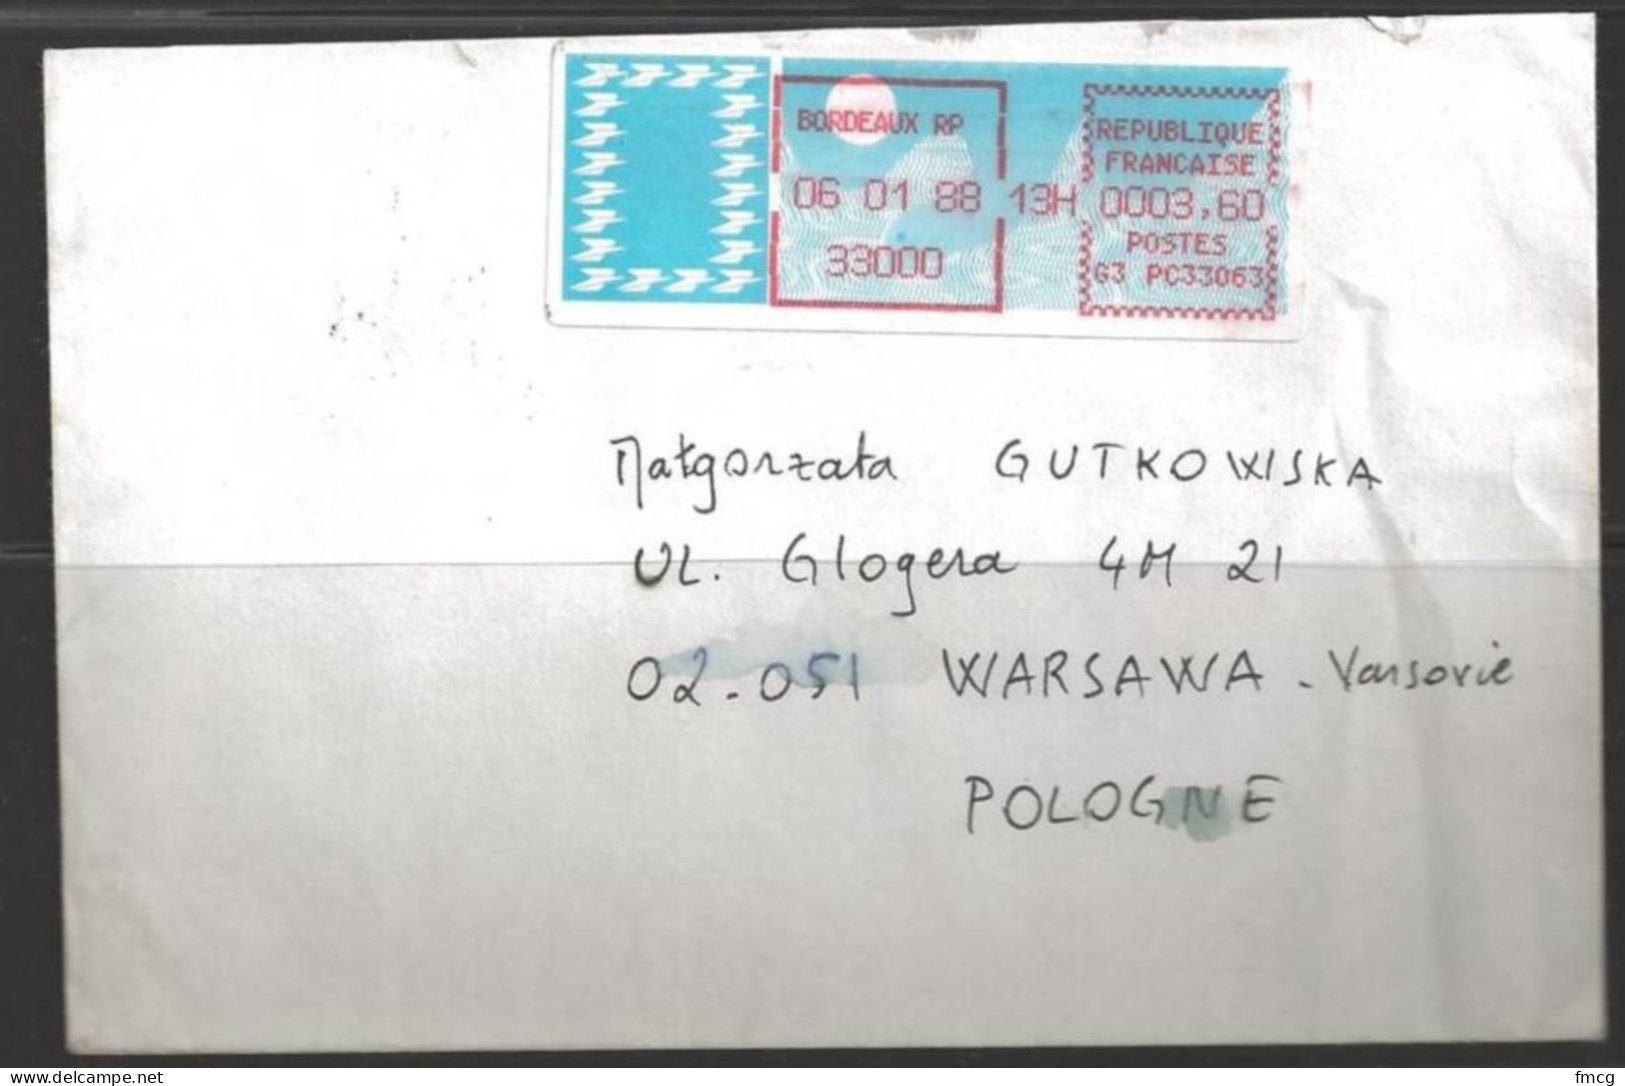 1988 Bordeaux Meter (06 01 88) To Warsawa Poland - Cartas & Documentos